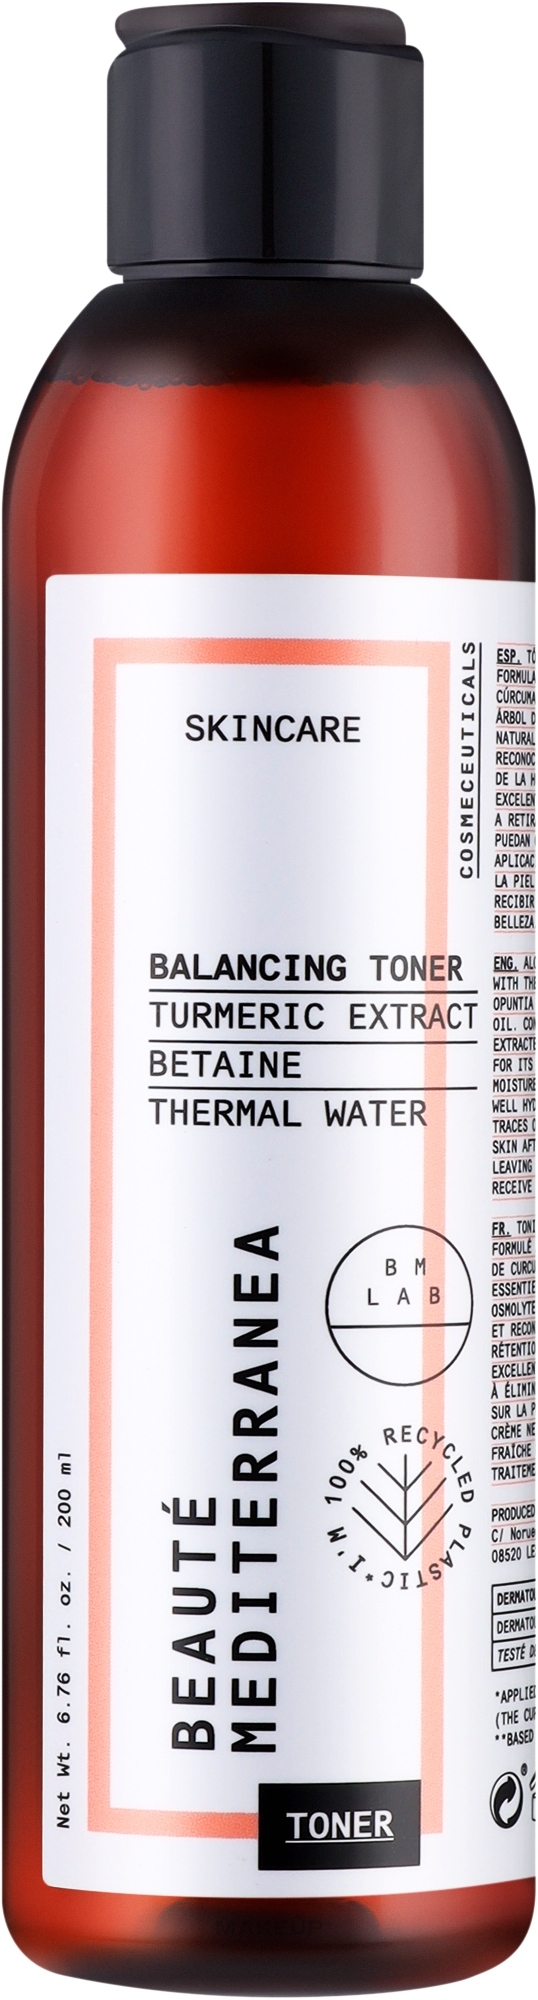 Tonik do twarzy z ekstraktem z kurkumy - Beaute Mediterranea Balancing Toner — Zdjęcie 200 ml